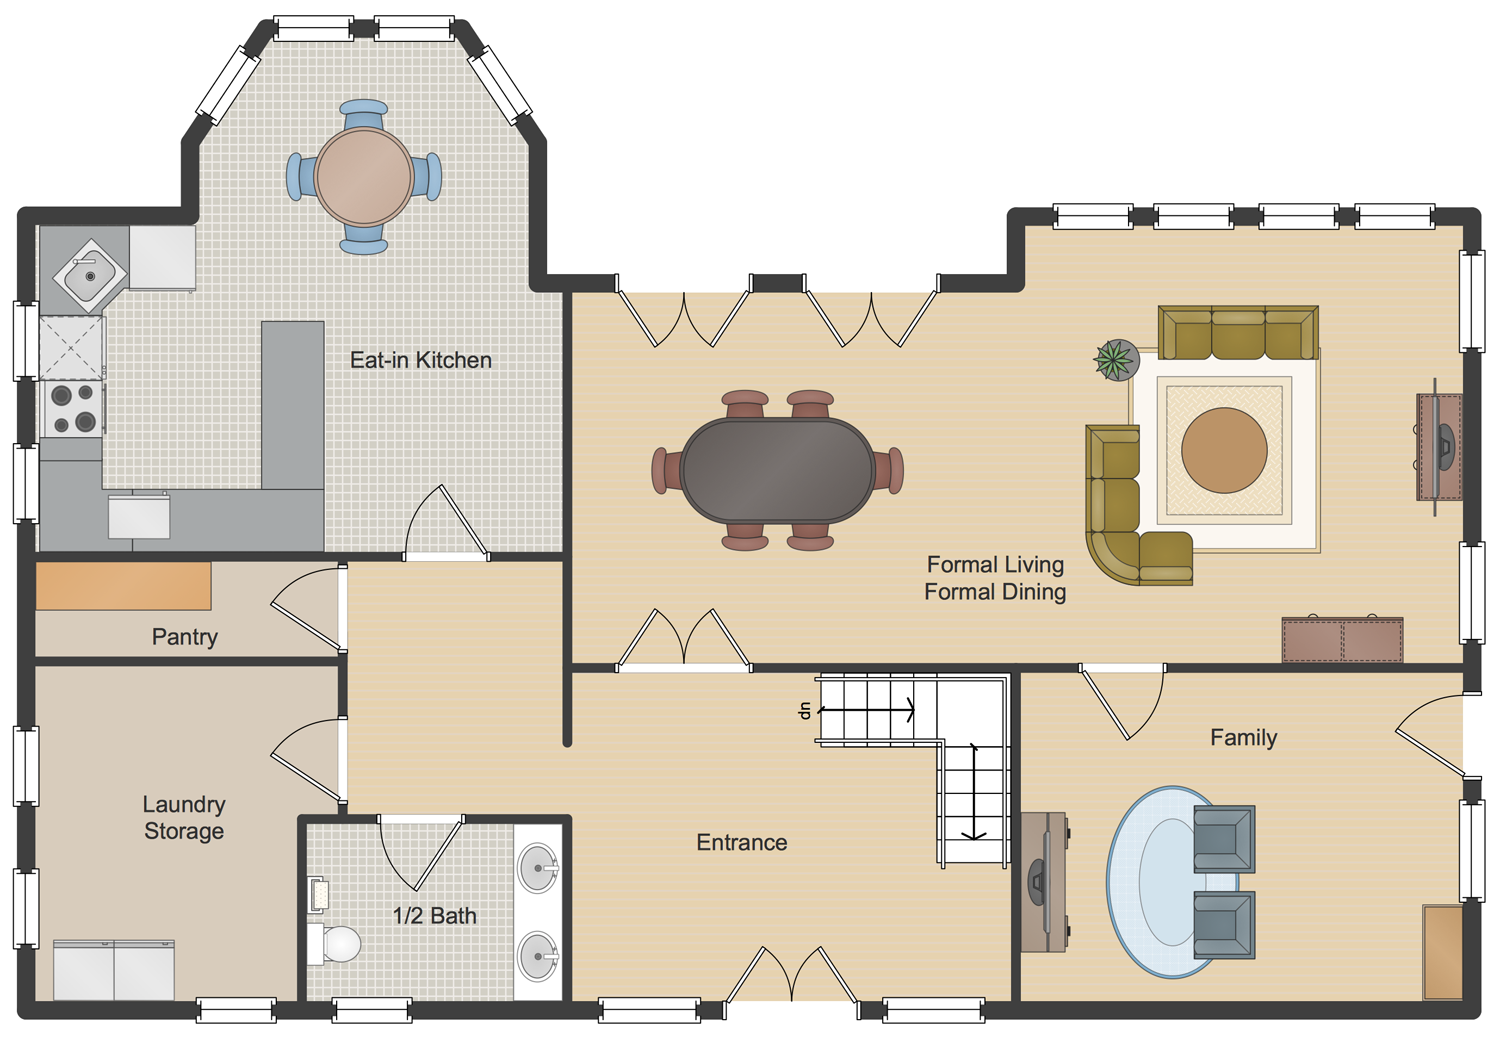 Single Family Detached Home Floor Plan